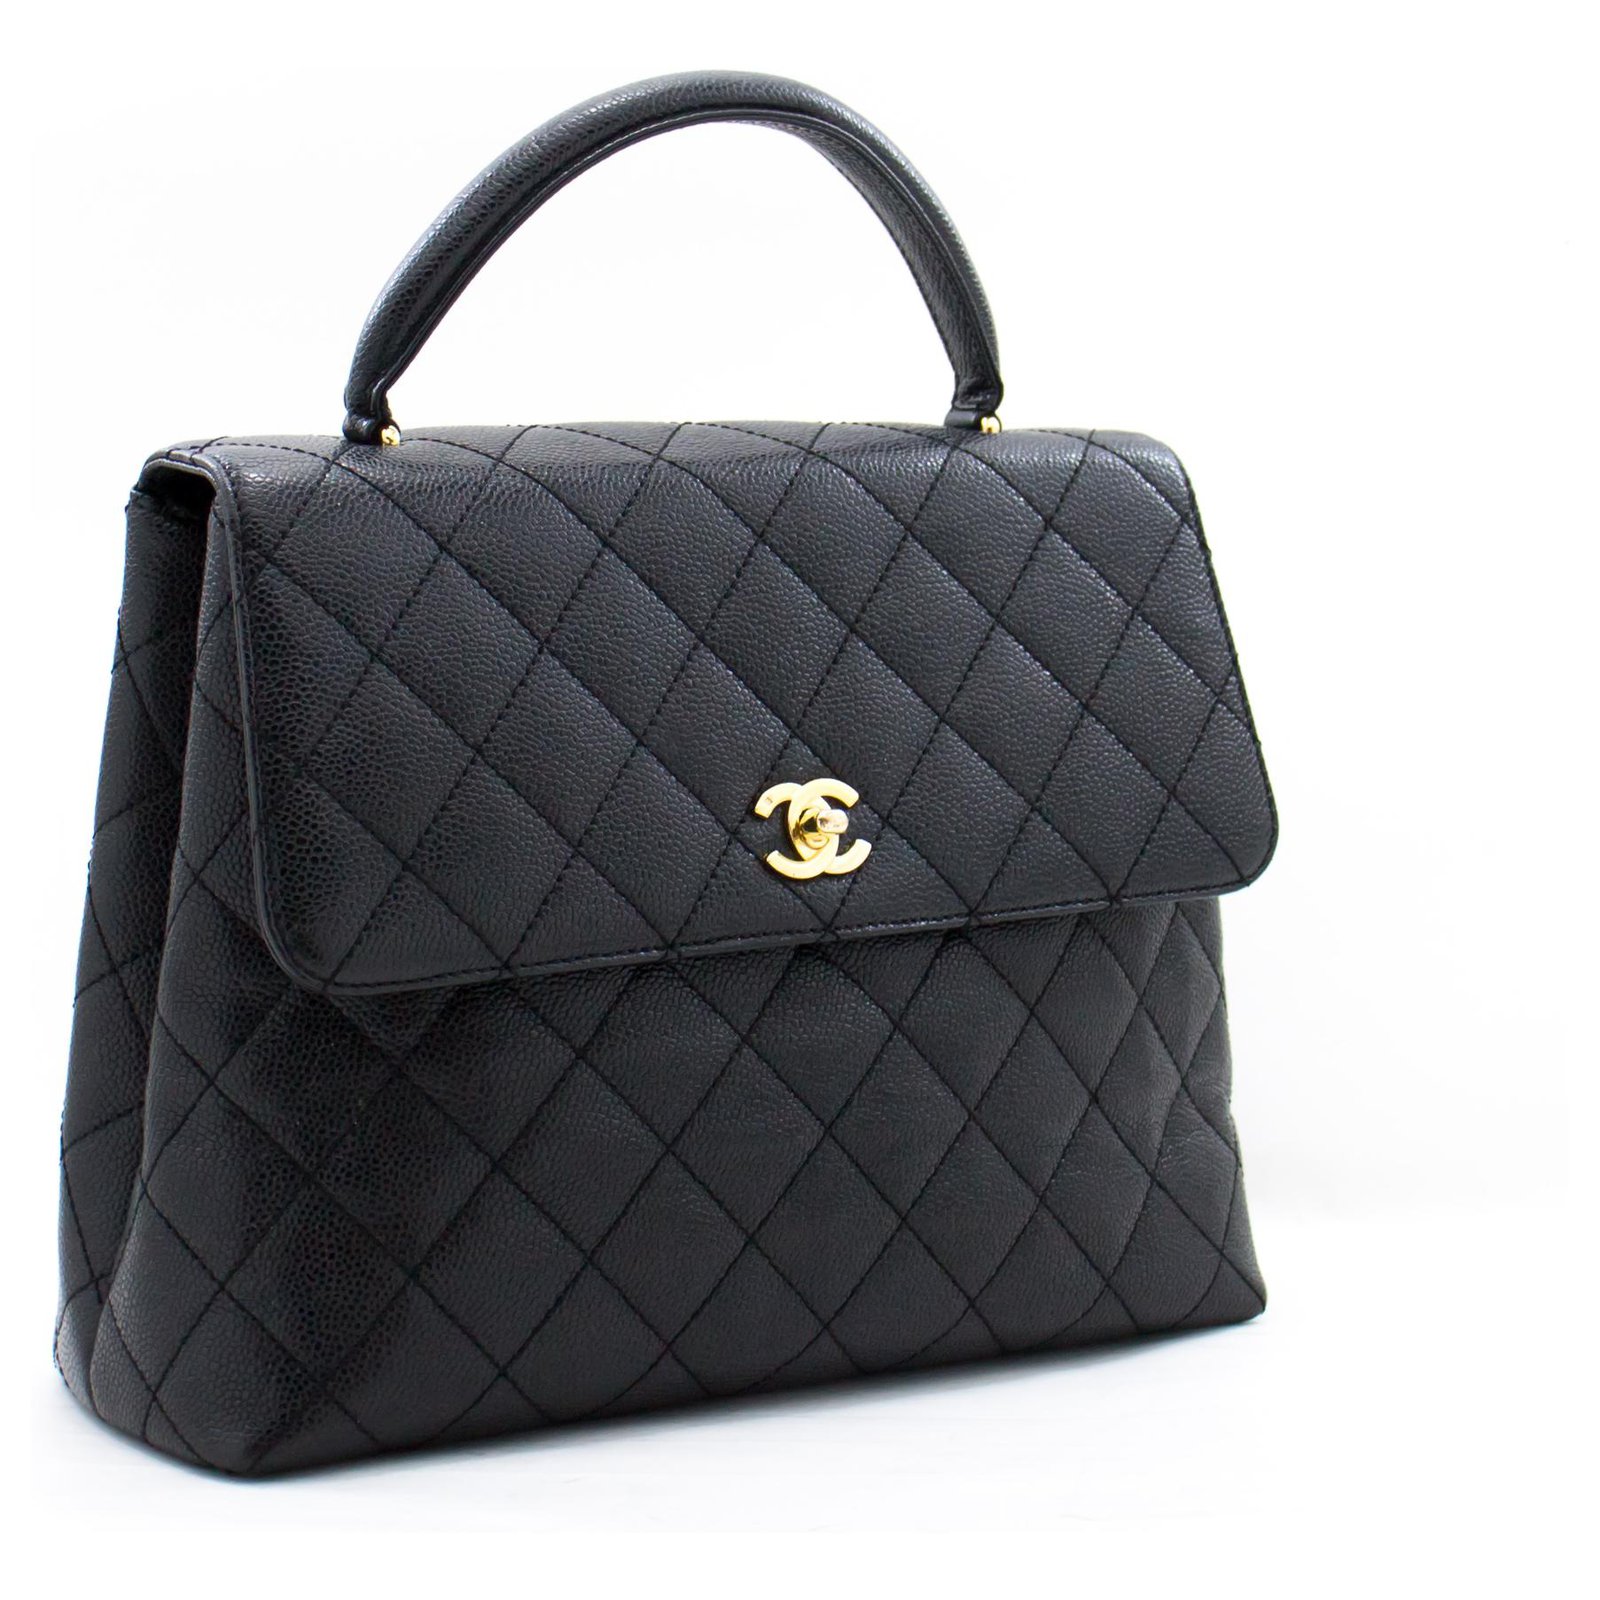 CHANEL Kelly Caviar Handbag Bag Black Flap Leather Gold Hardware